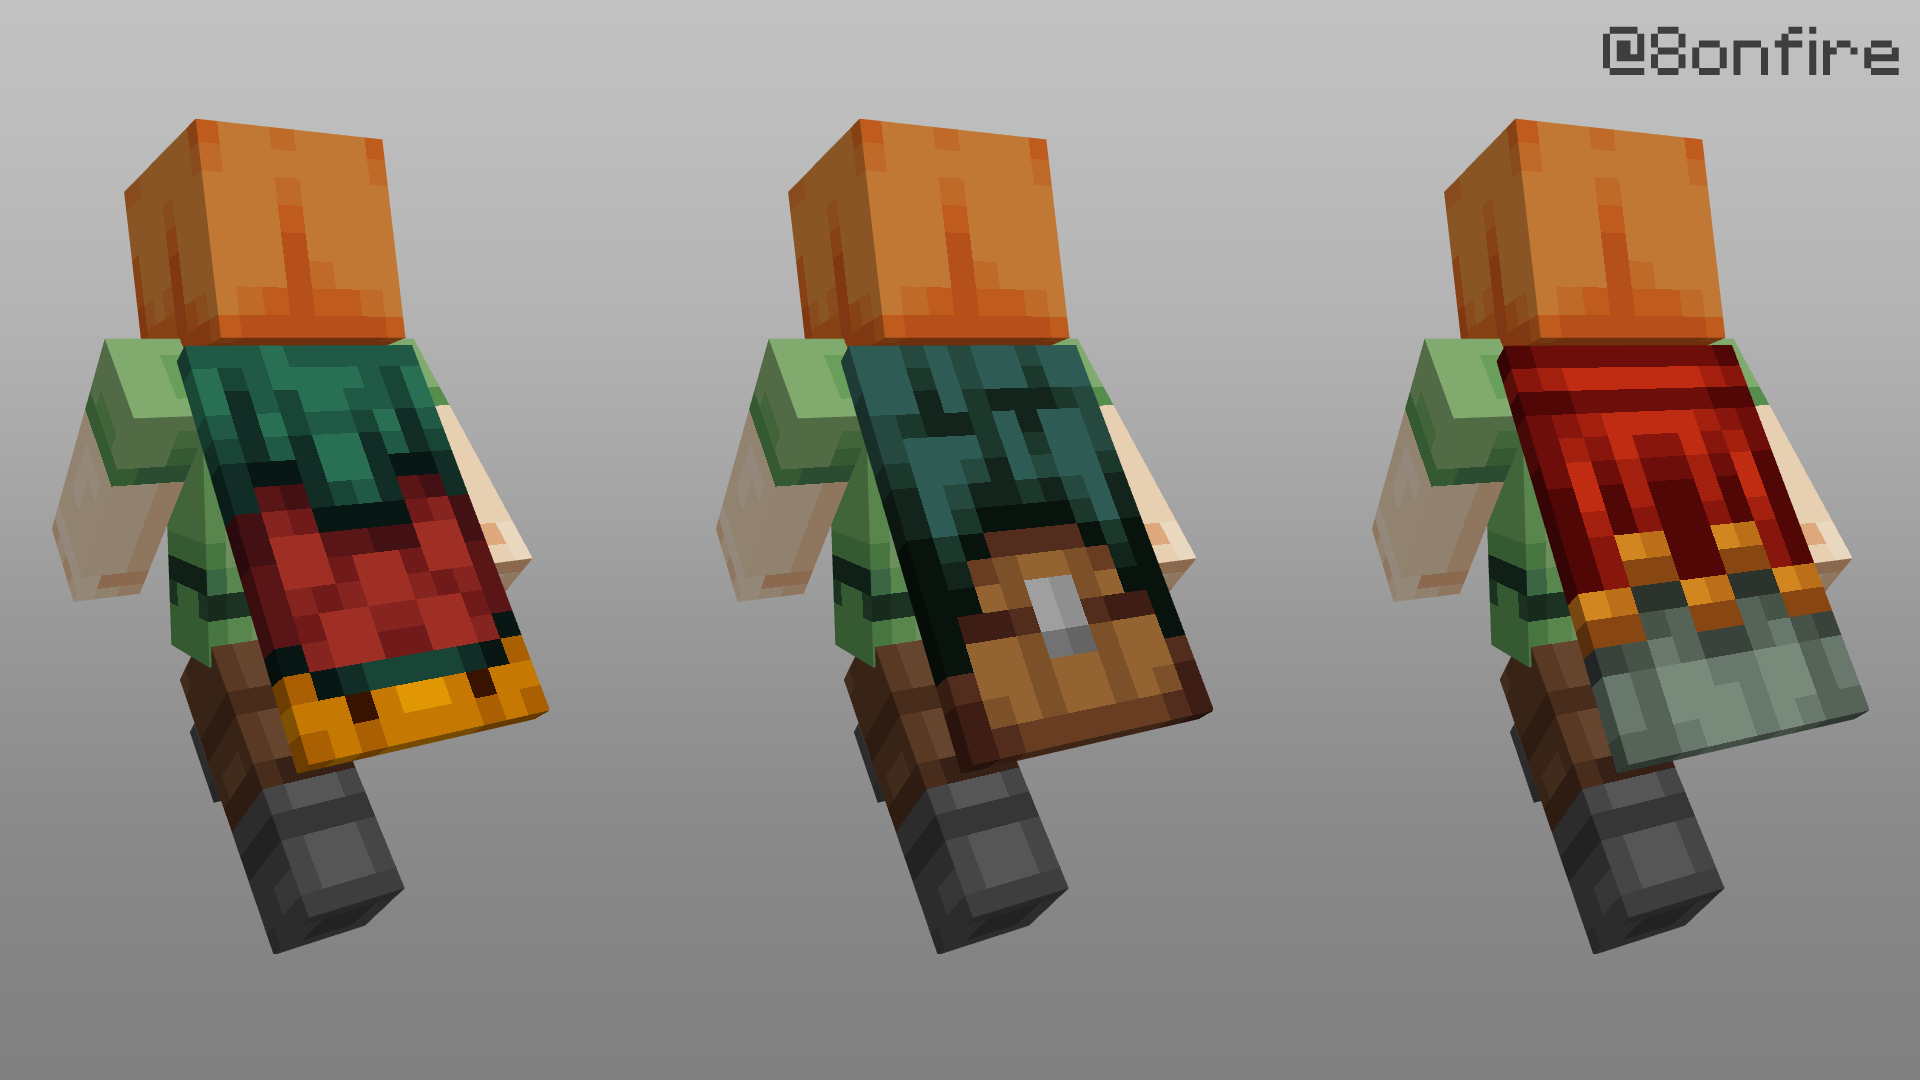 Mob Costume Party Minecraft Skin Pack - Kaini's Pixels's Ko-fi